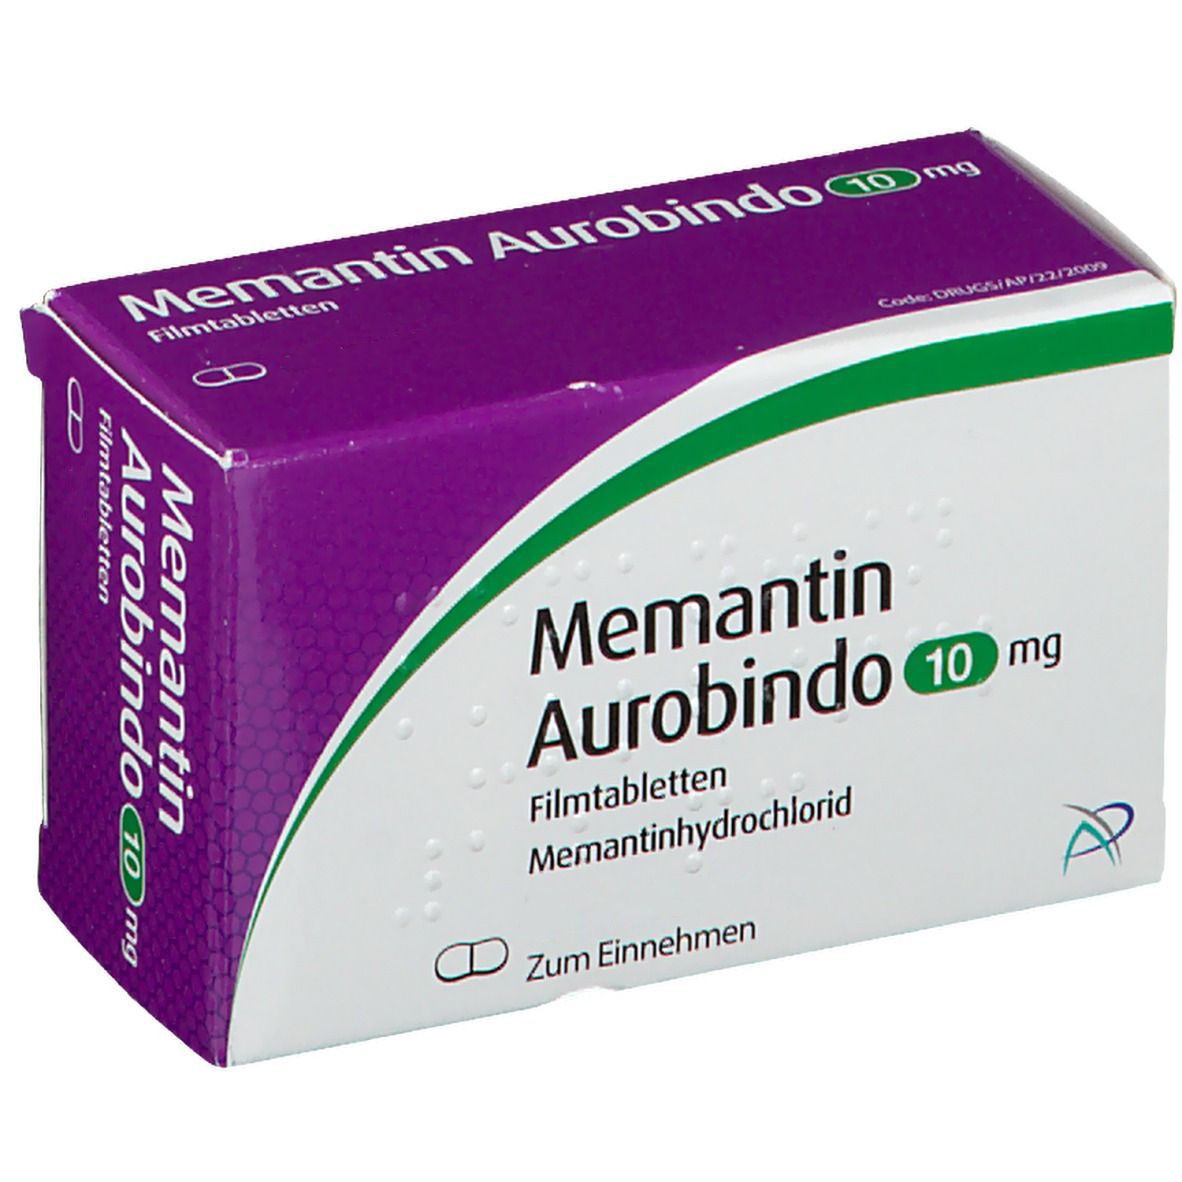 Memantin Aurobindo 10 mg